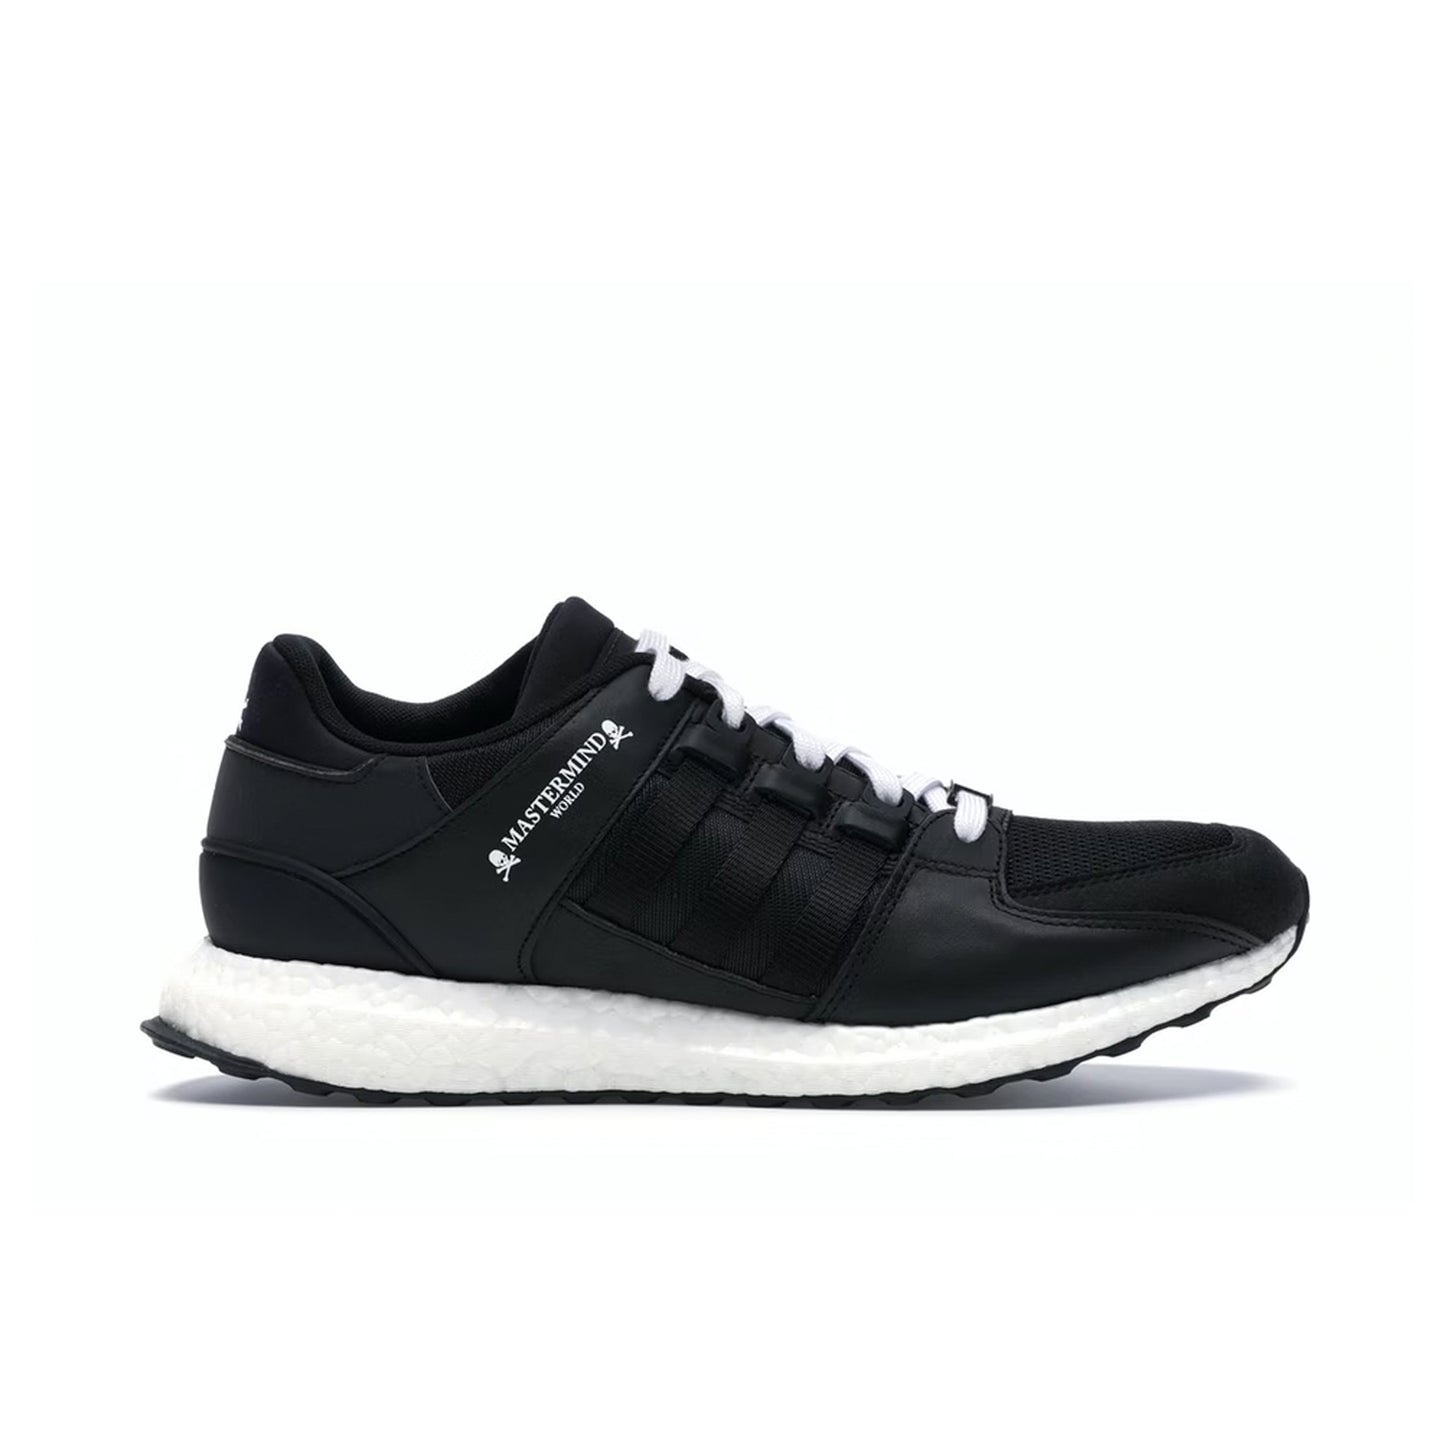 Adidas x Mastermind EQT Support Ultra "Black"